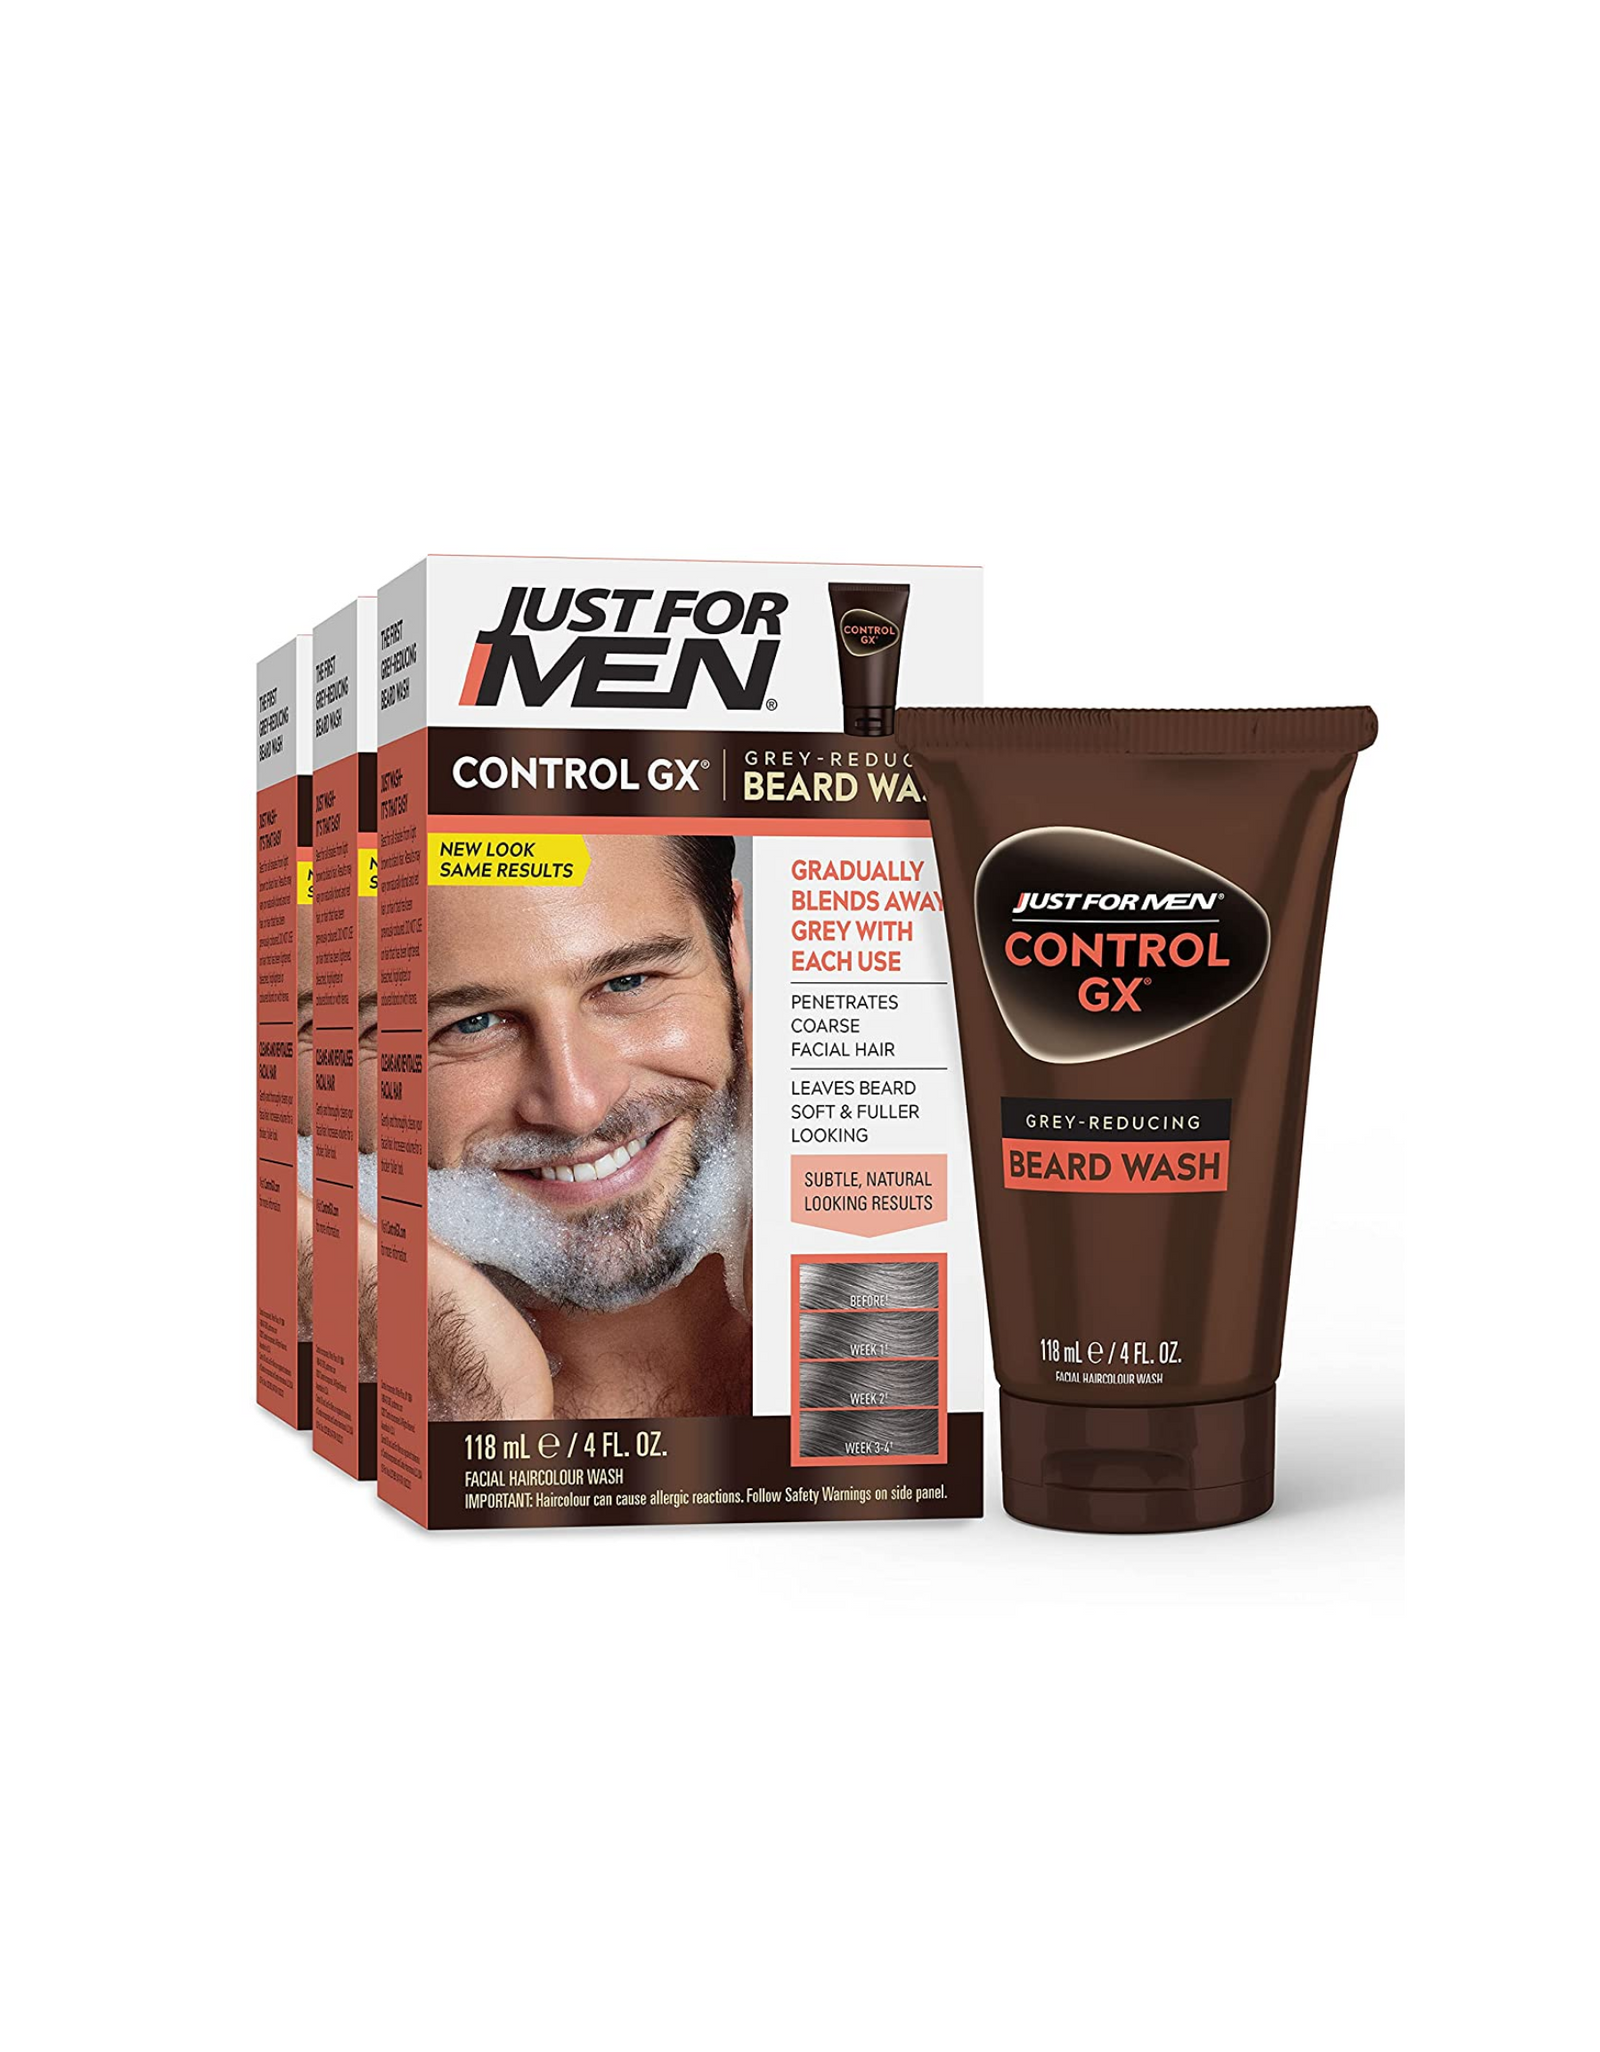 Just For Men Control GX Grey Reducing Beard Wash Shampoo, 4 Fl Oz - Pack of 3 (Packaging May Vary)